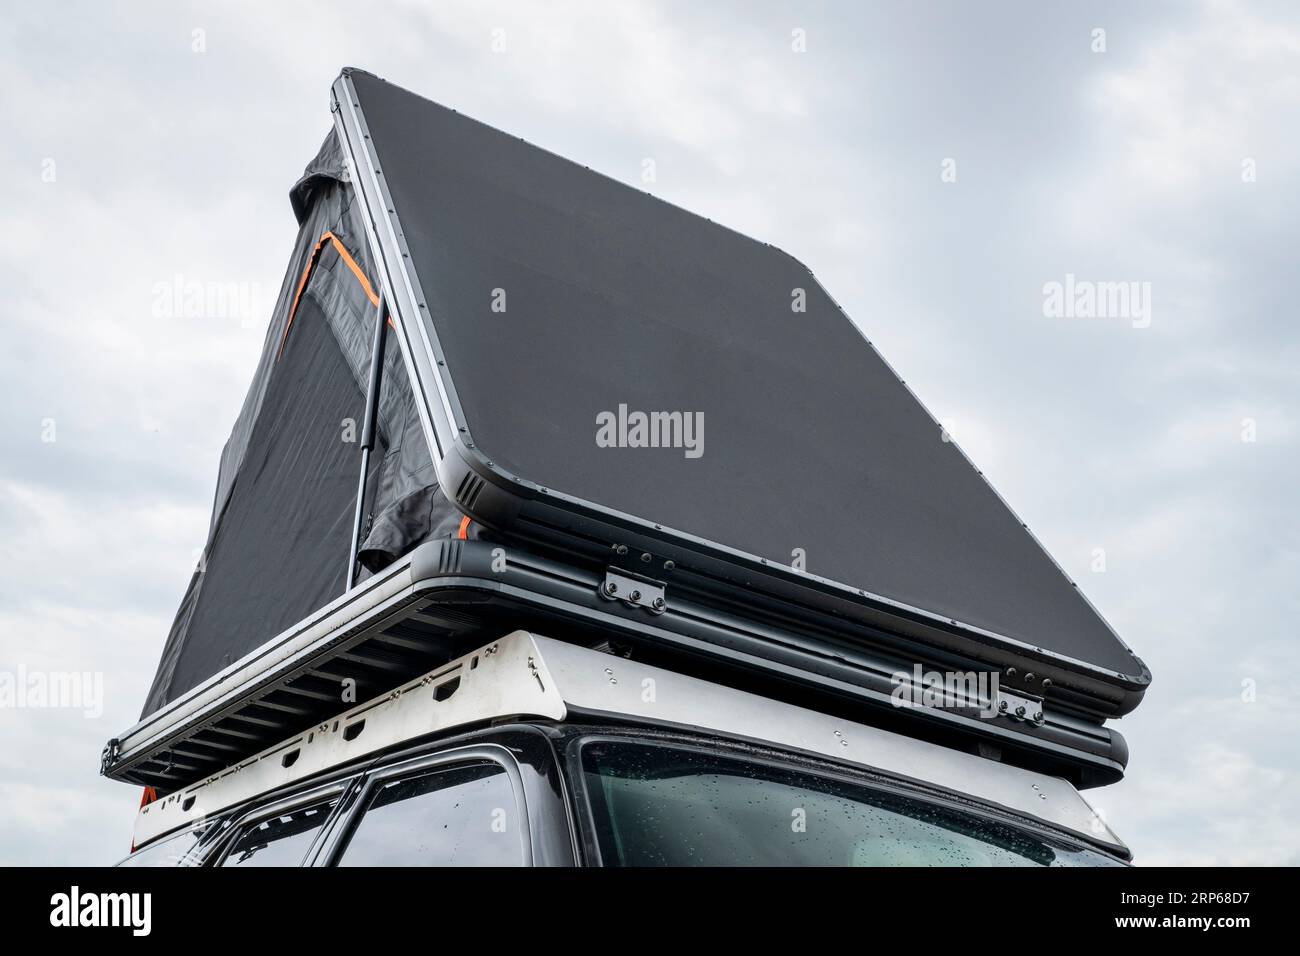 Camping suv -Fotos und -Bildmaterial in hoher Auflösung – Alamy